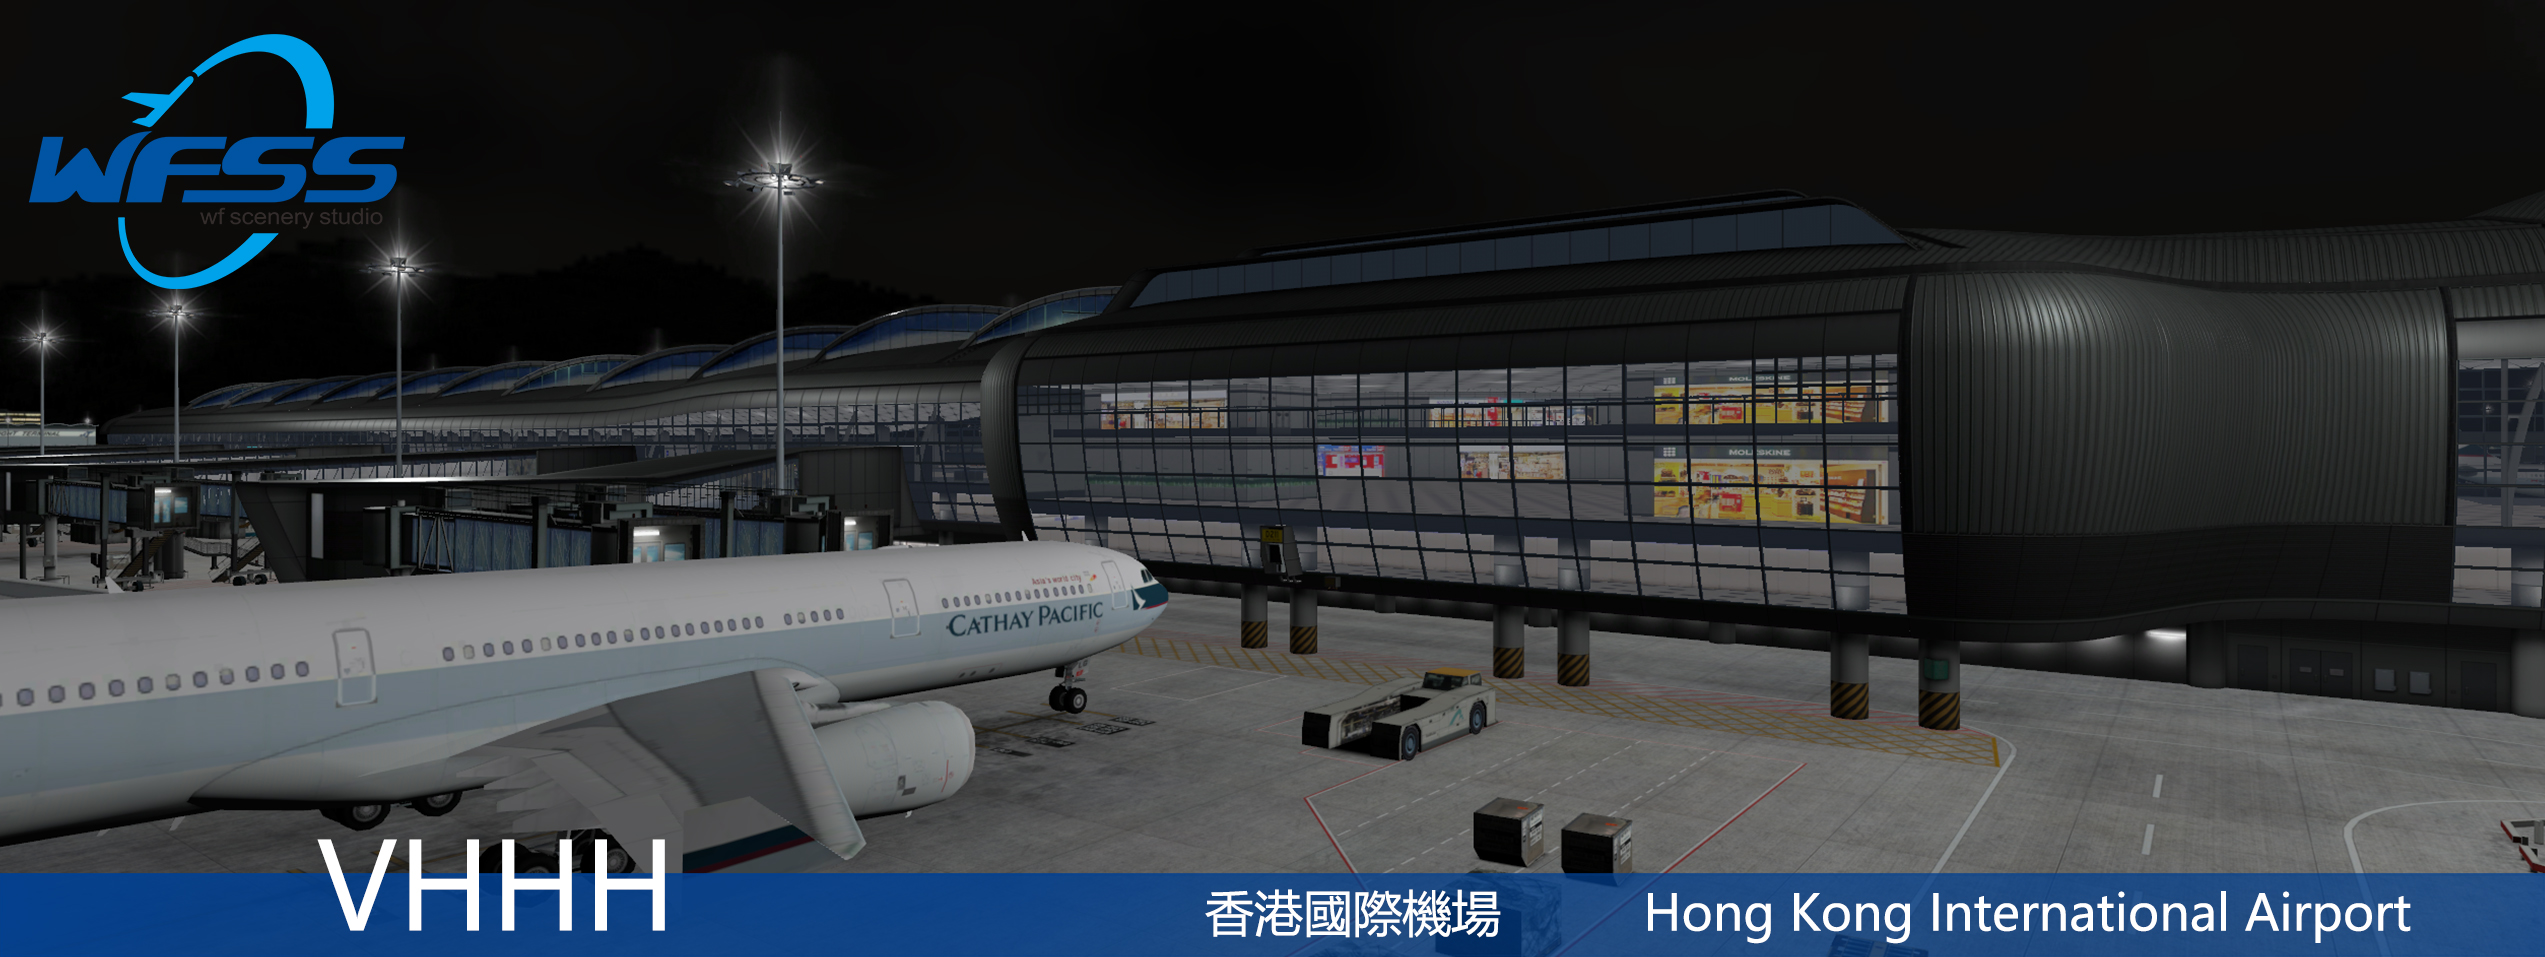 WFSS-香港国际机场发布-4700 